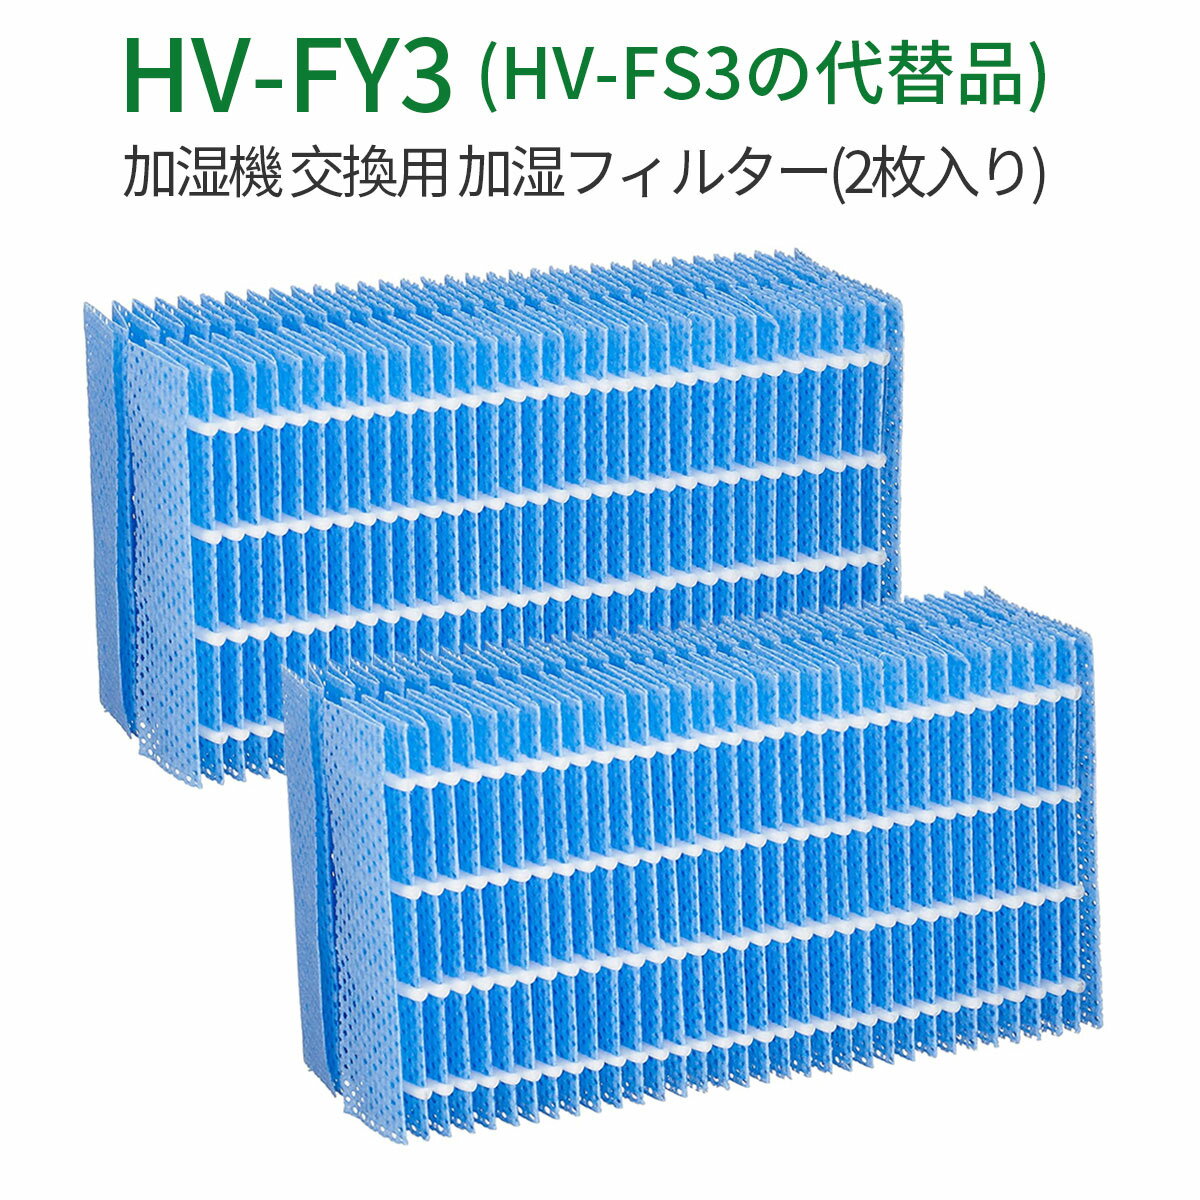 HV-FY3 加湿フィルター シャープ 加湿器 フィルター hv-fy3 HV-FS3の代替品 気化式加湿機用 交換フィルター (互換品/2枚入り)